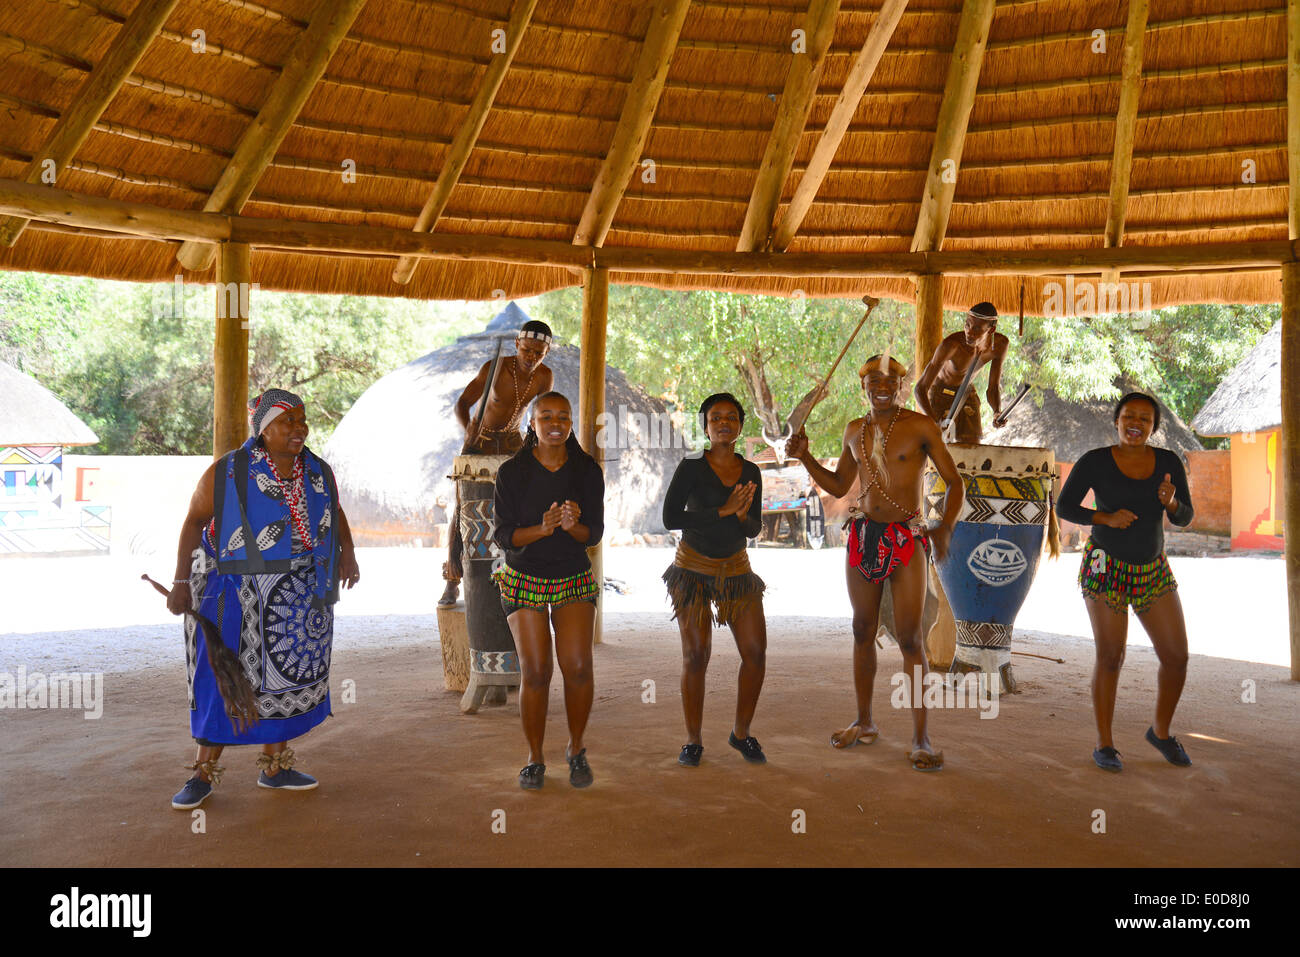 Tribal dancers at Motseng Cultural Village, Sun City Resort, Pilanesberg, North West Province, Republic of South Africa Stock Photo